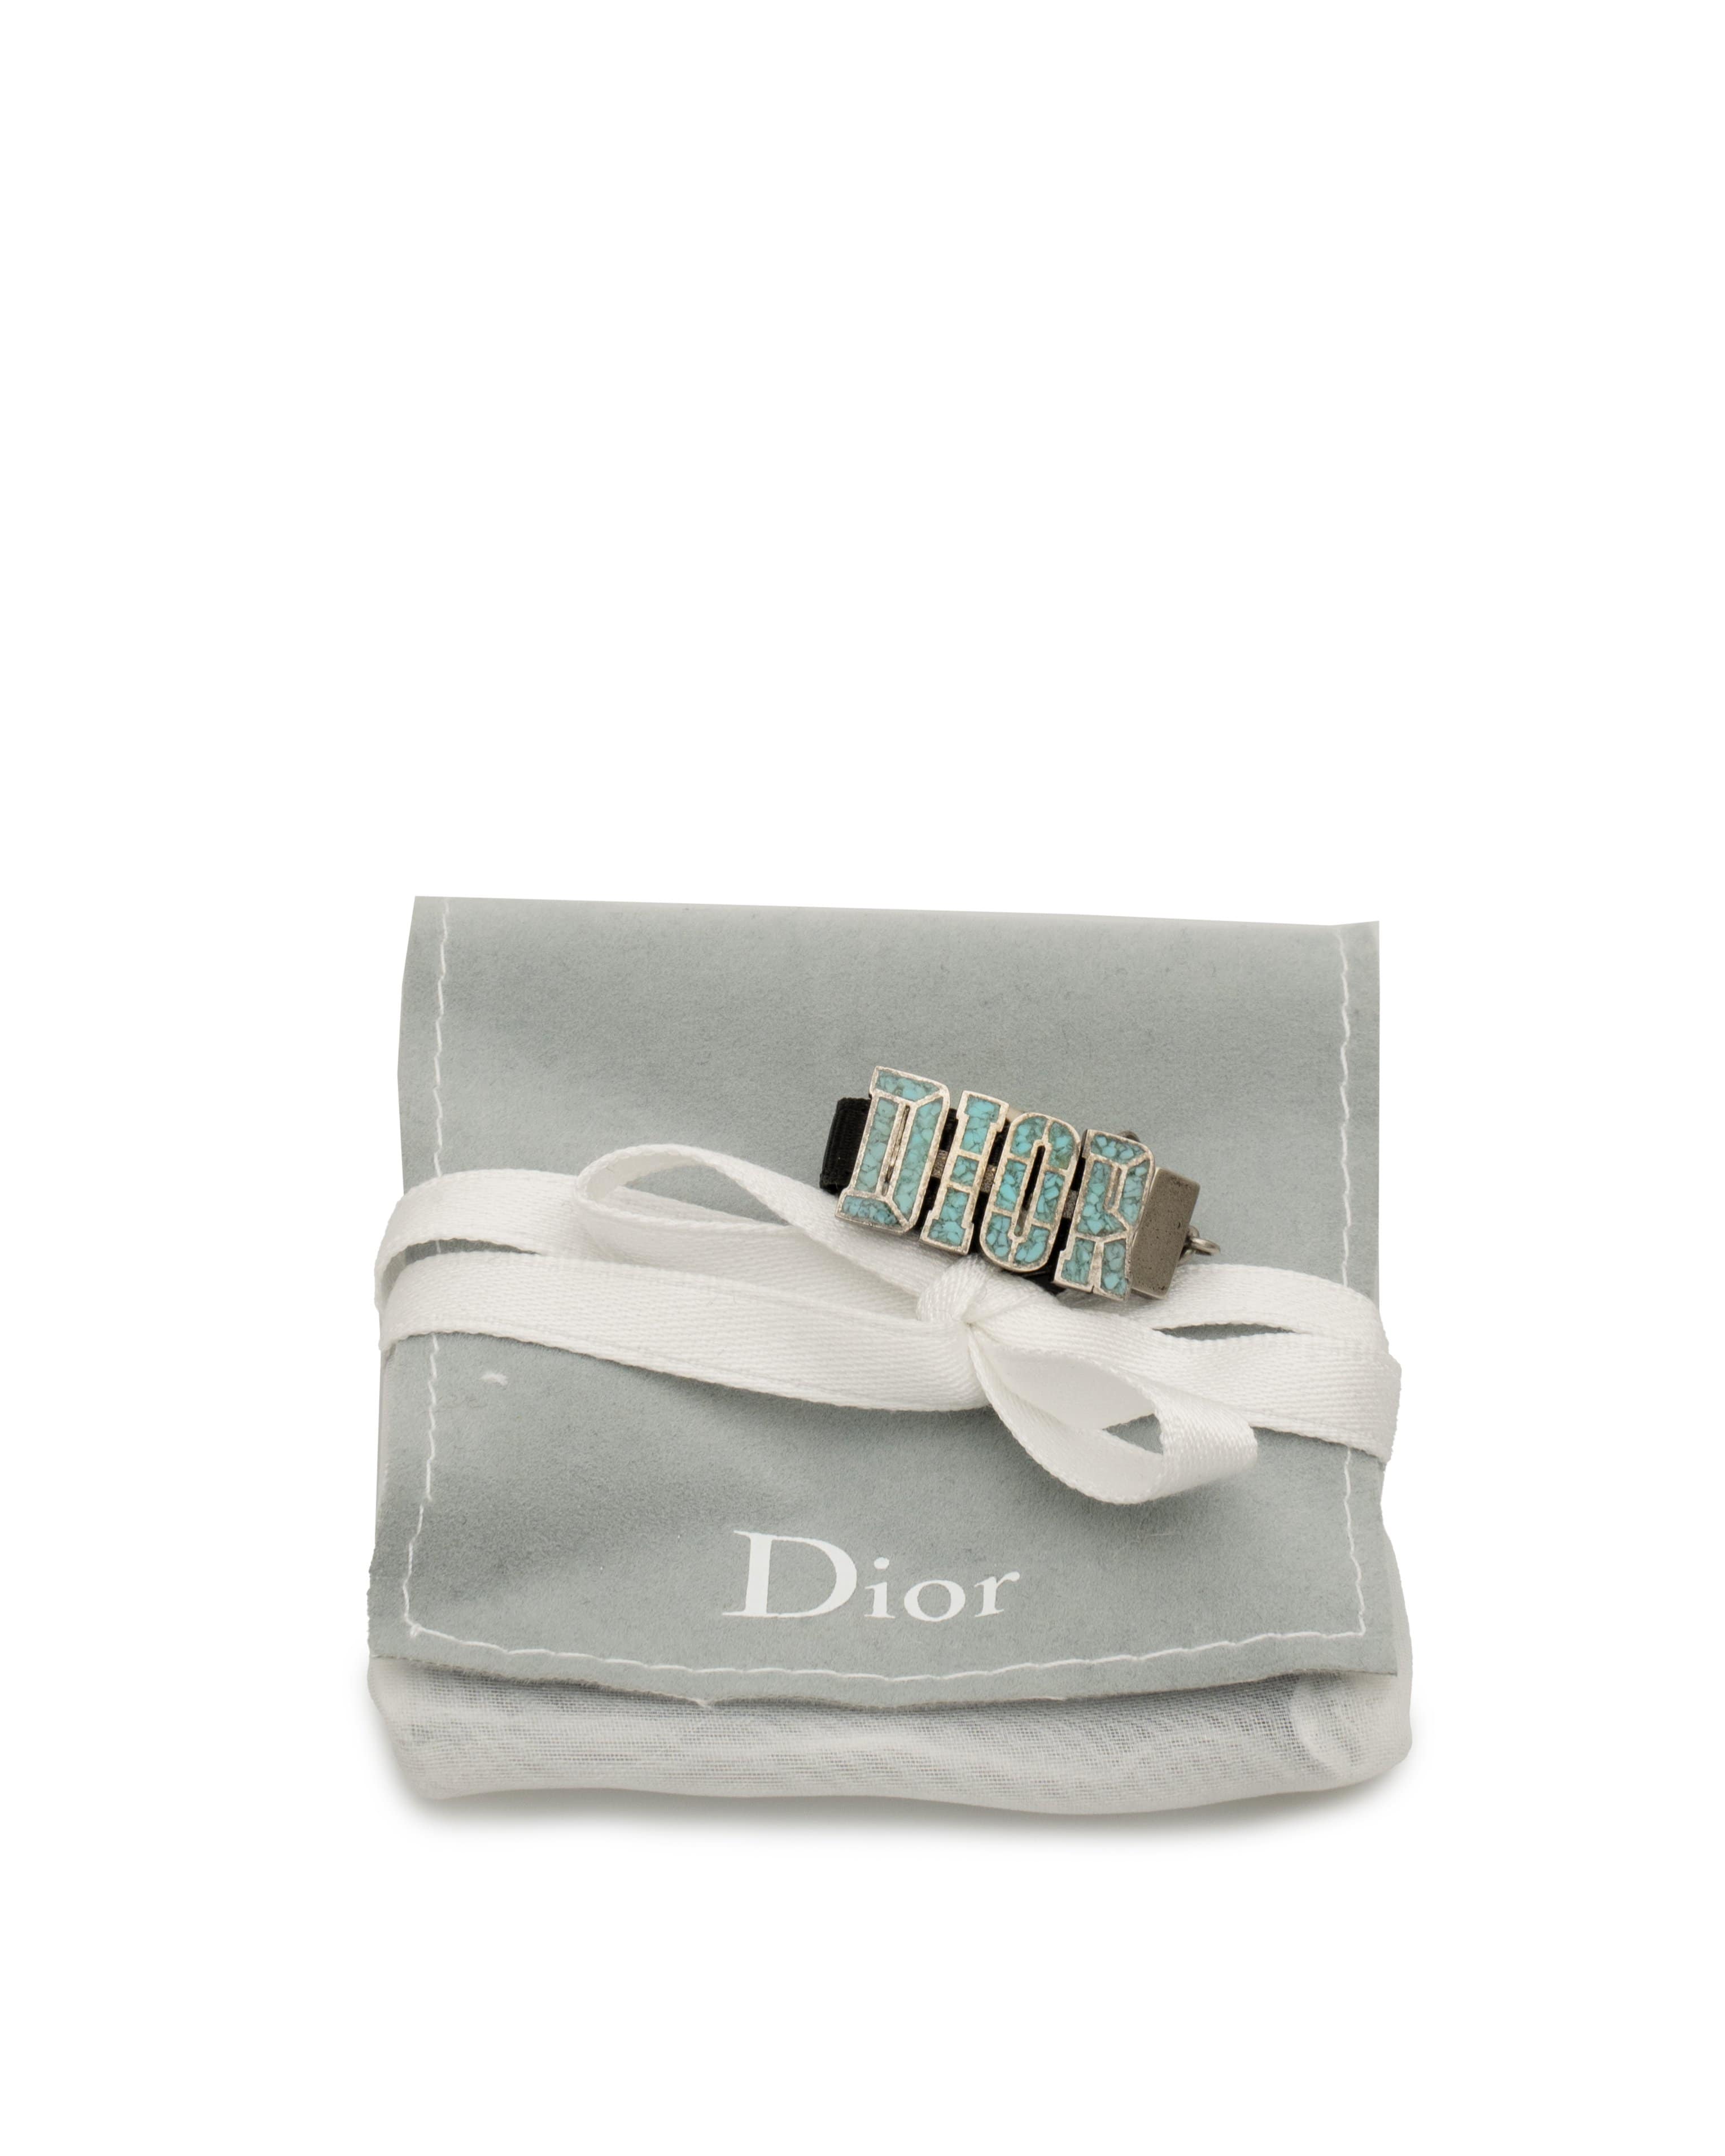 Christian Dior Dior Choker RJL1272